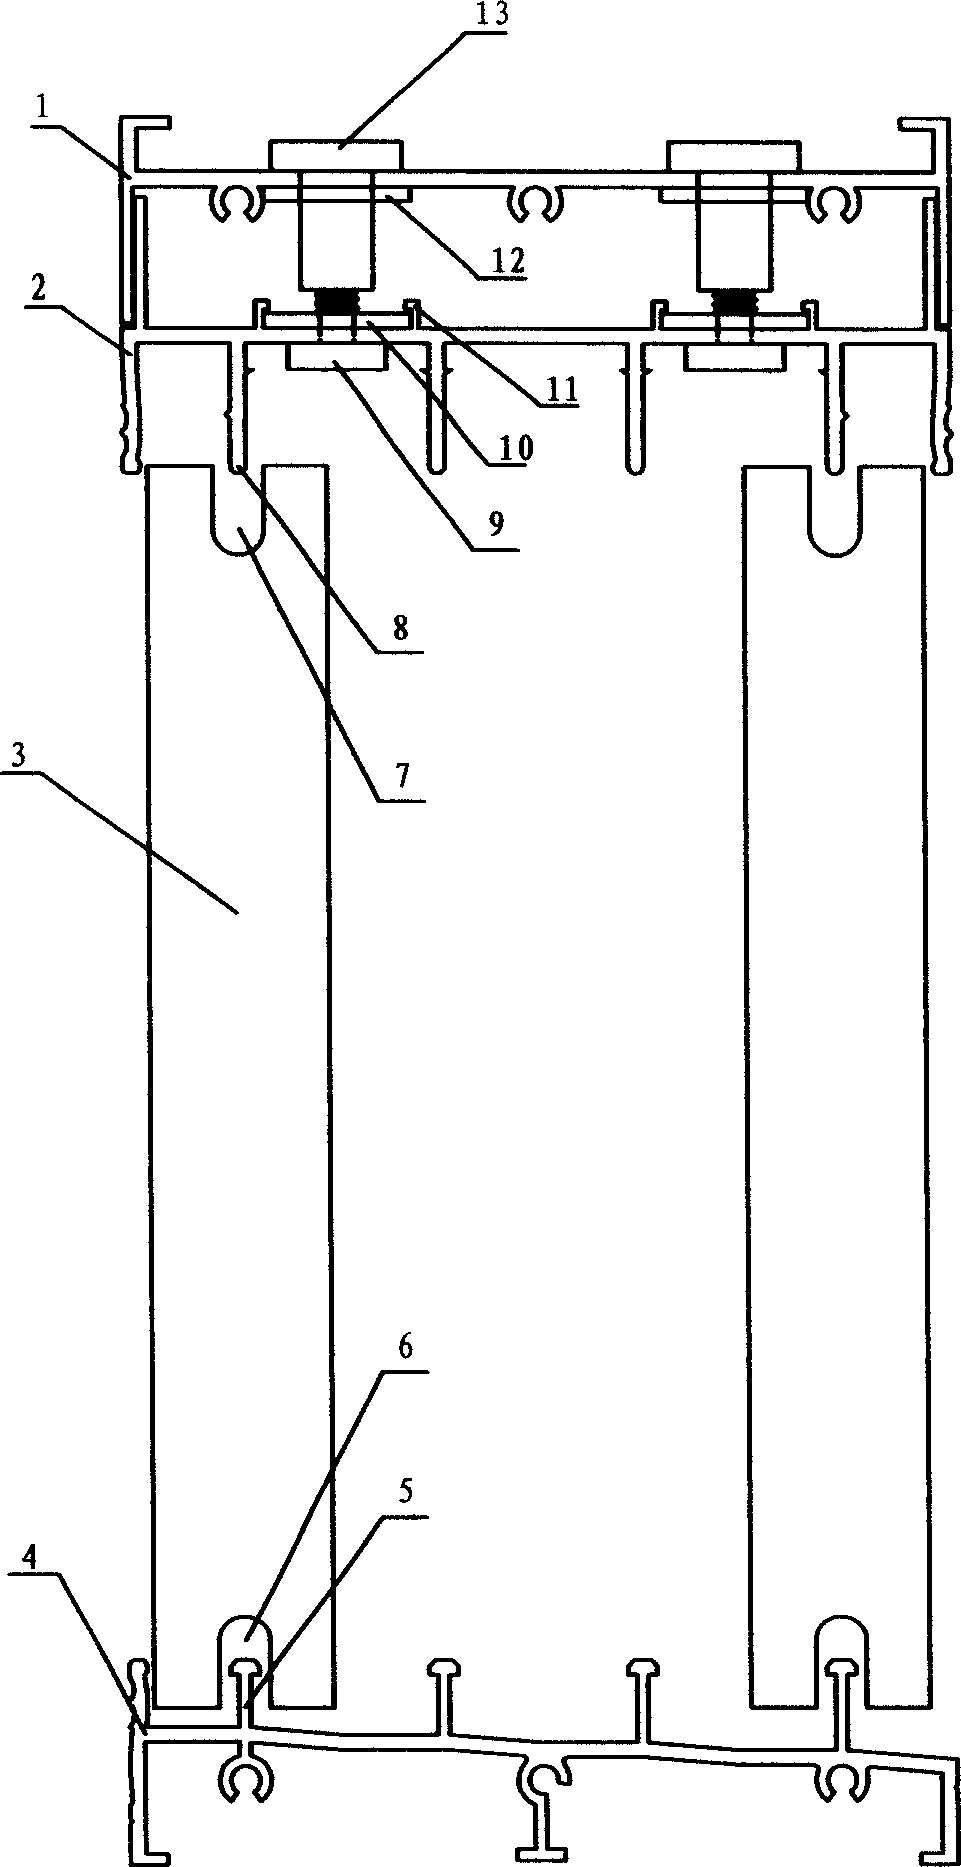 Sliding door and window with movable top slideway